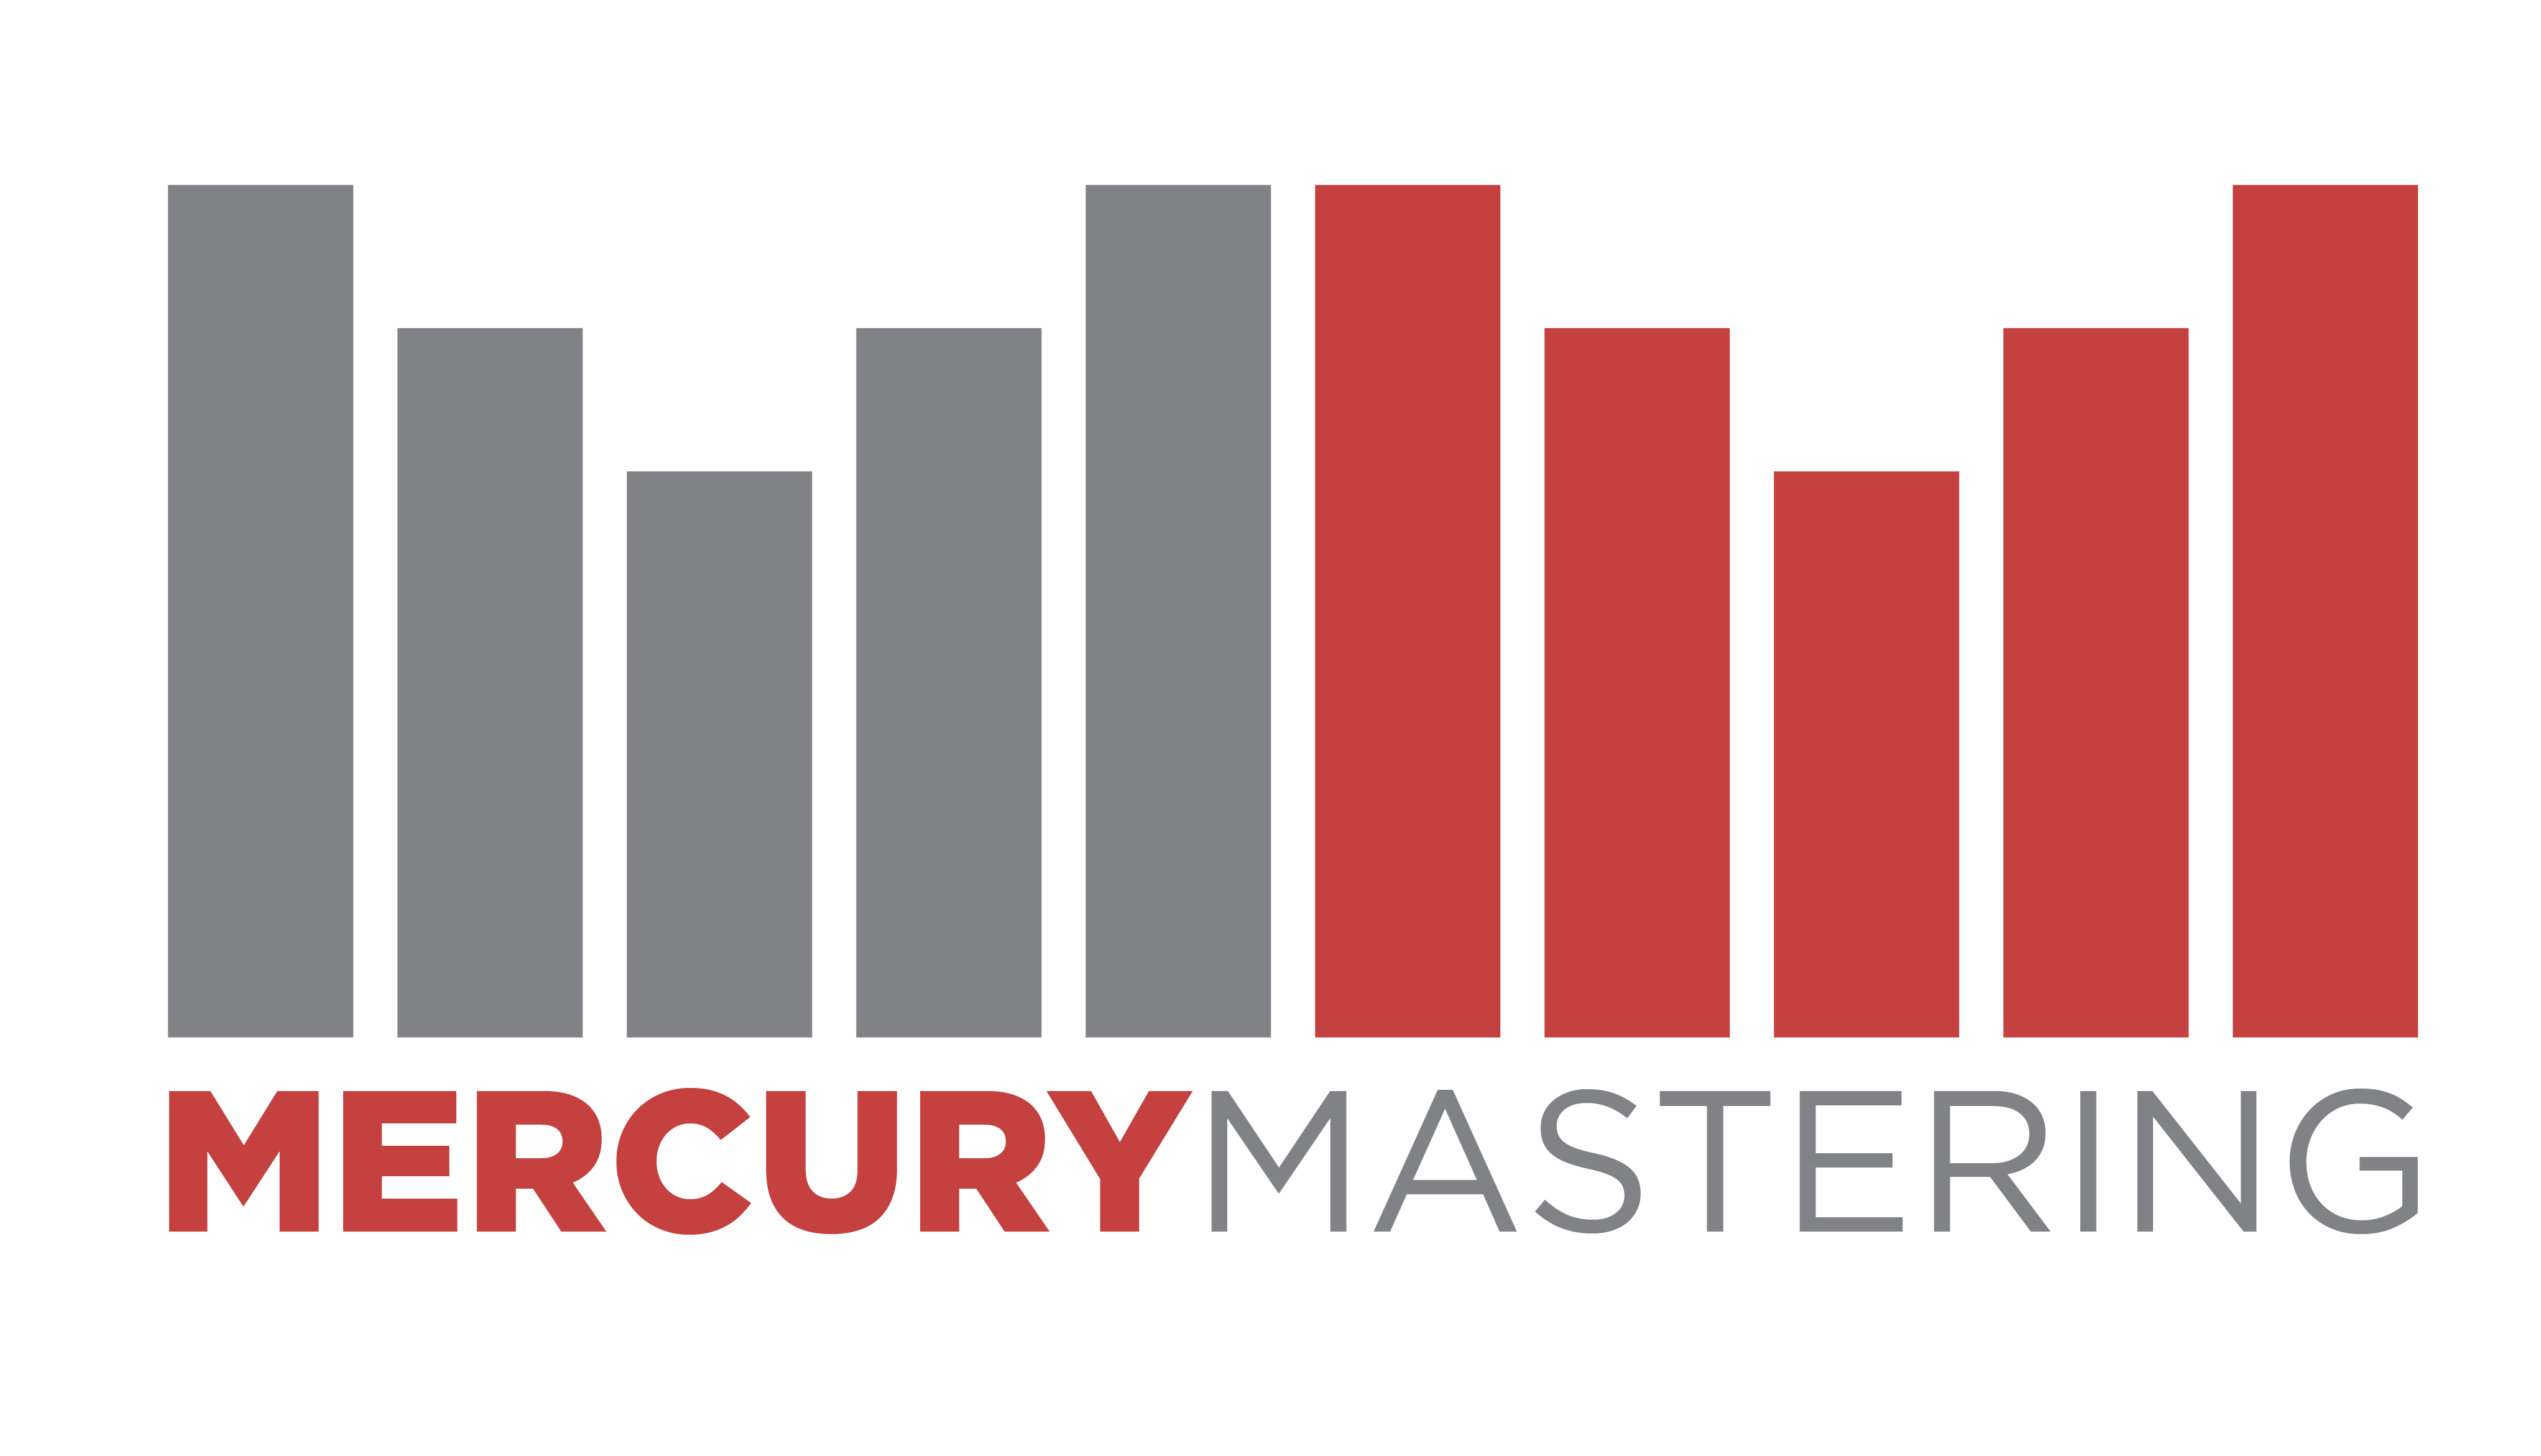 Mercury Mastering